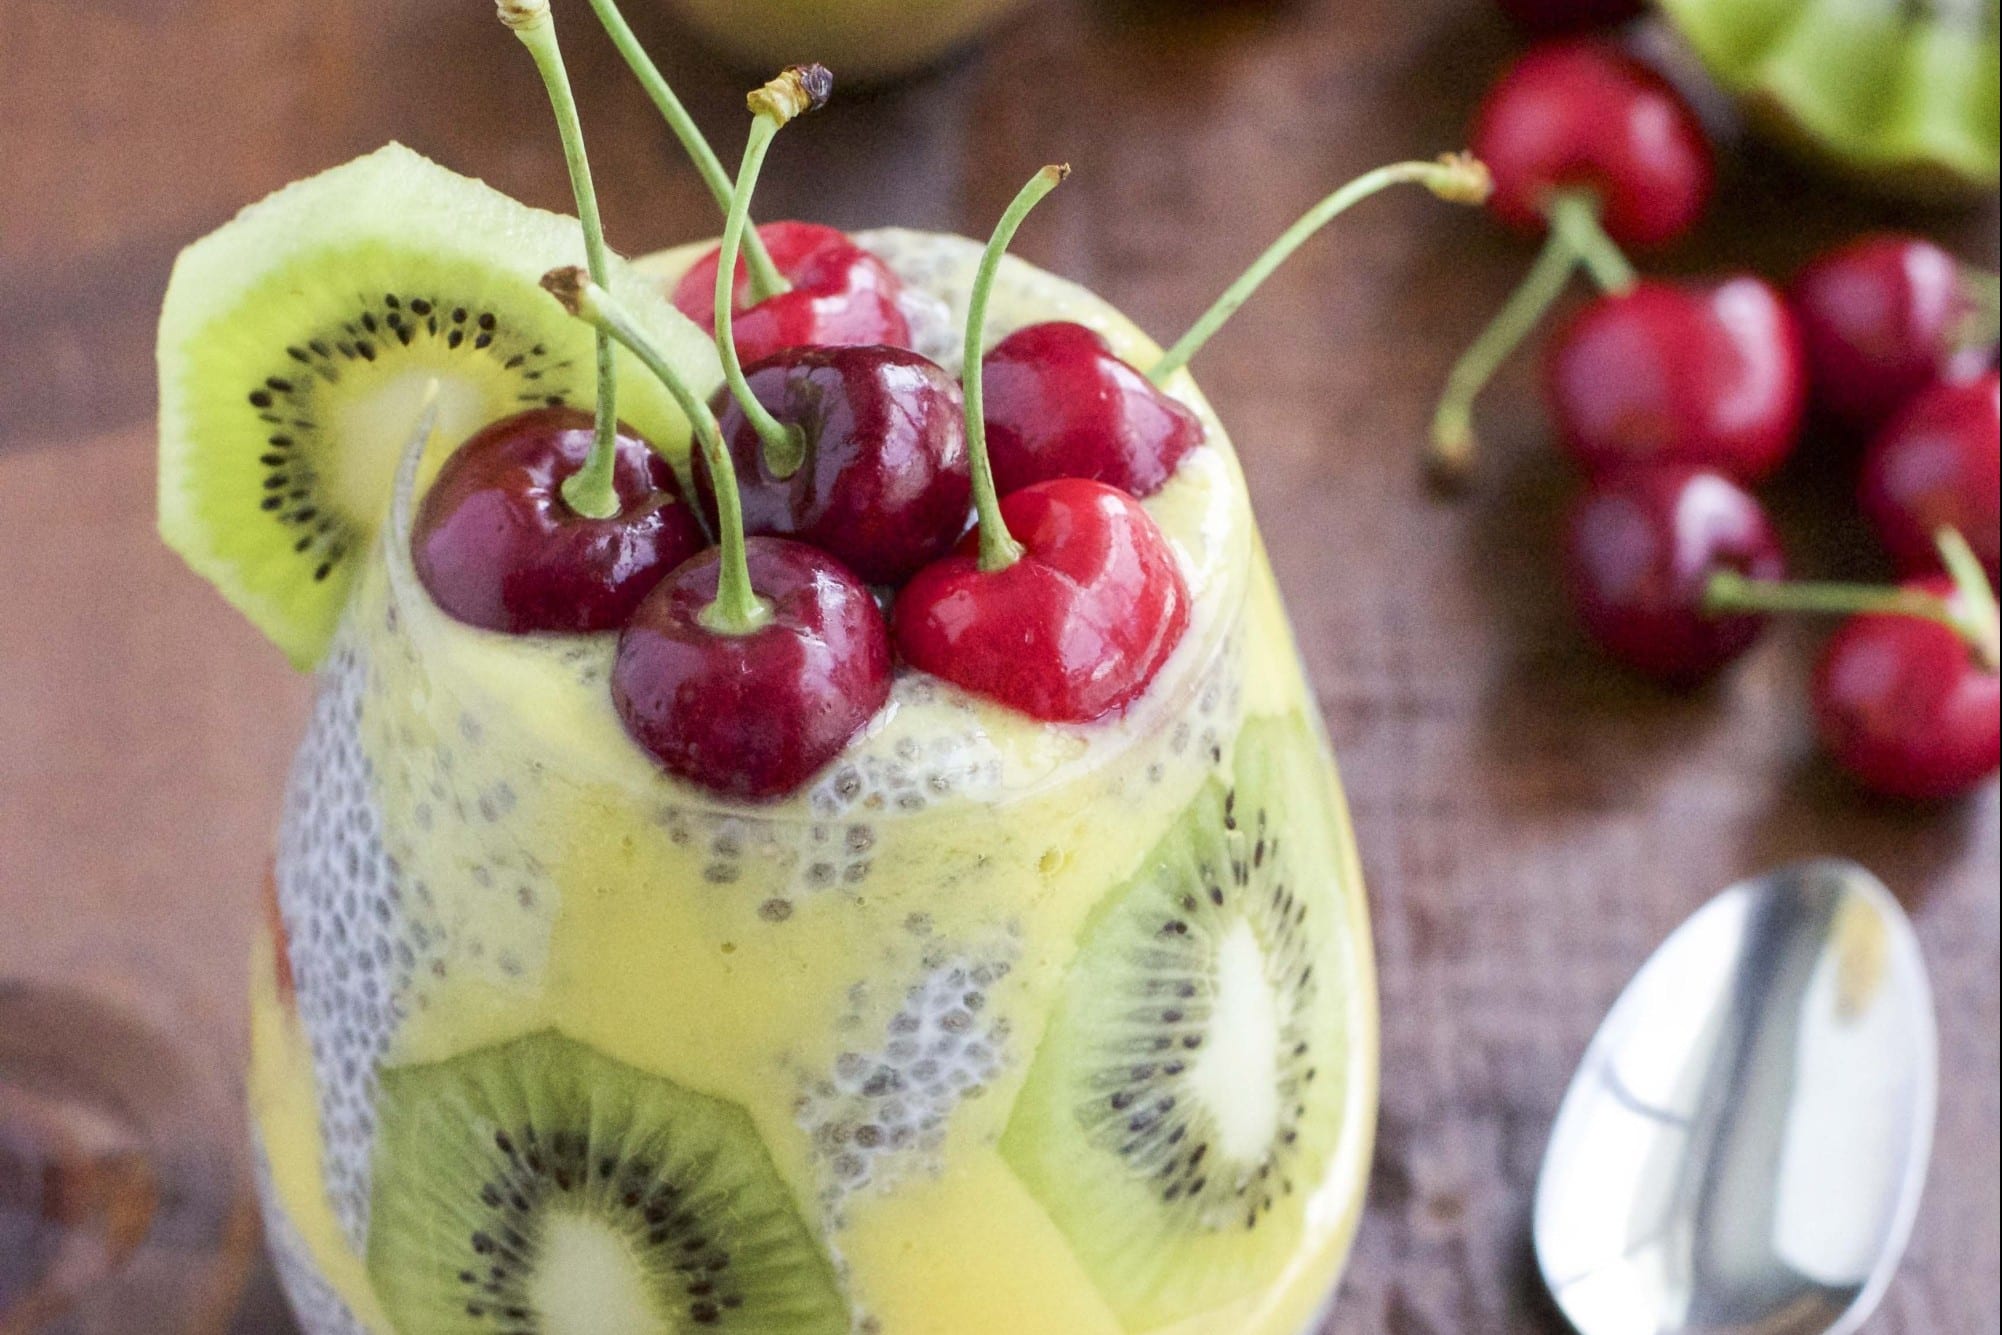 18 Chia Seed Pudding Recipes Everyone Will Love: Kiwi mango Cherry Chia Seed Pudding